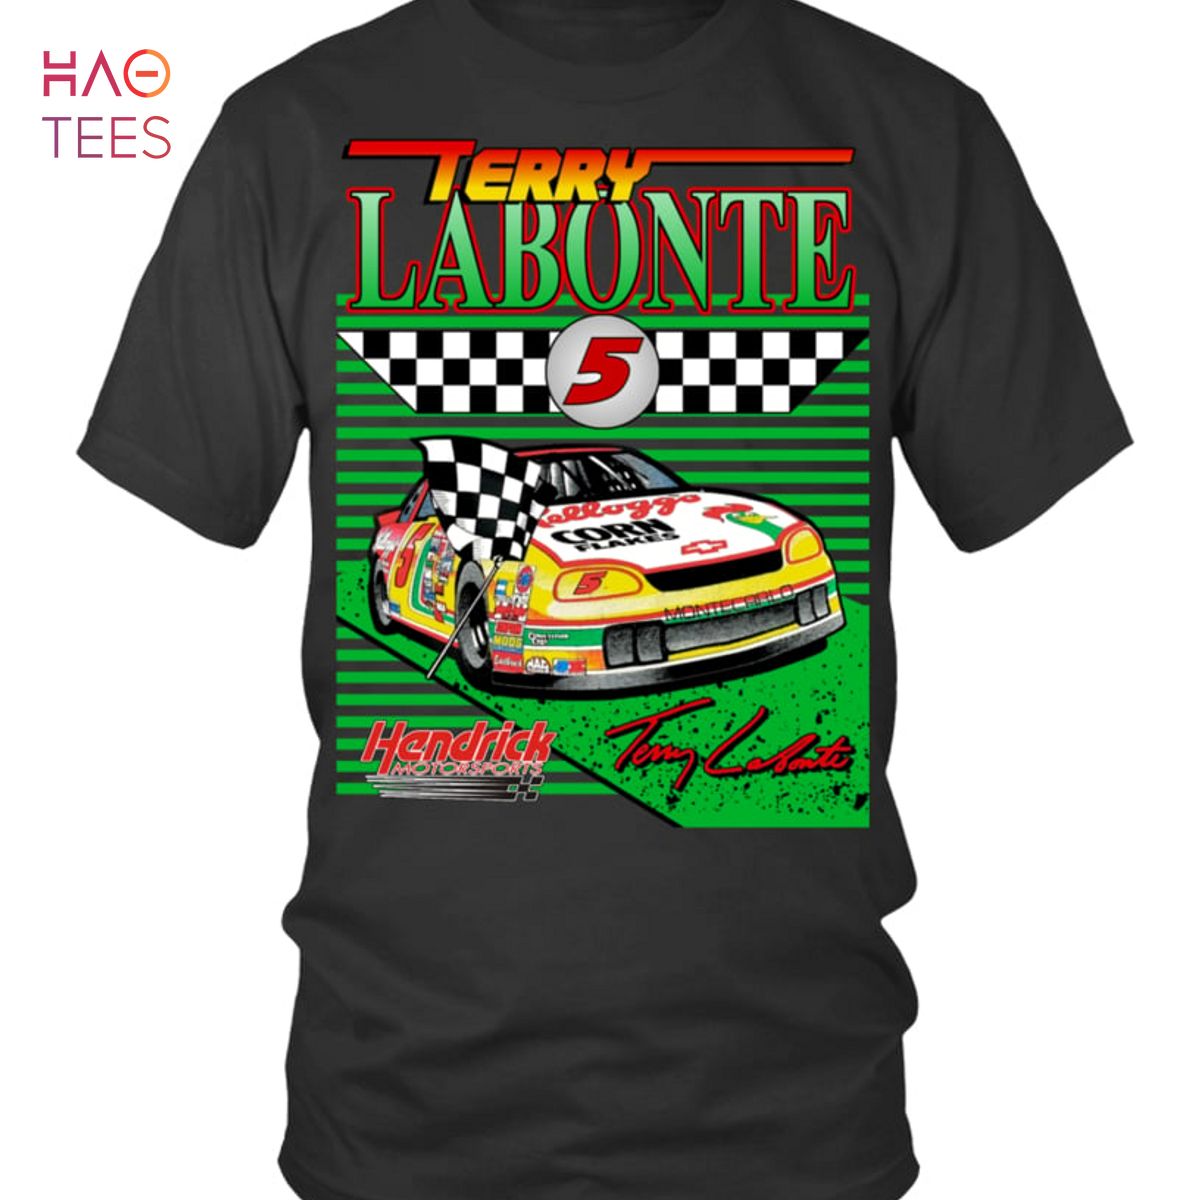 Terry Labonte Hendrick Motorsports Shirt